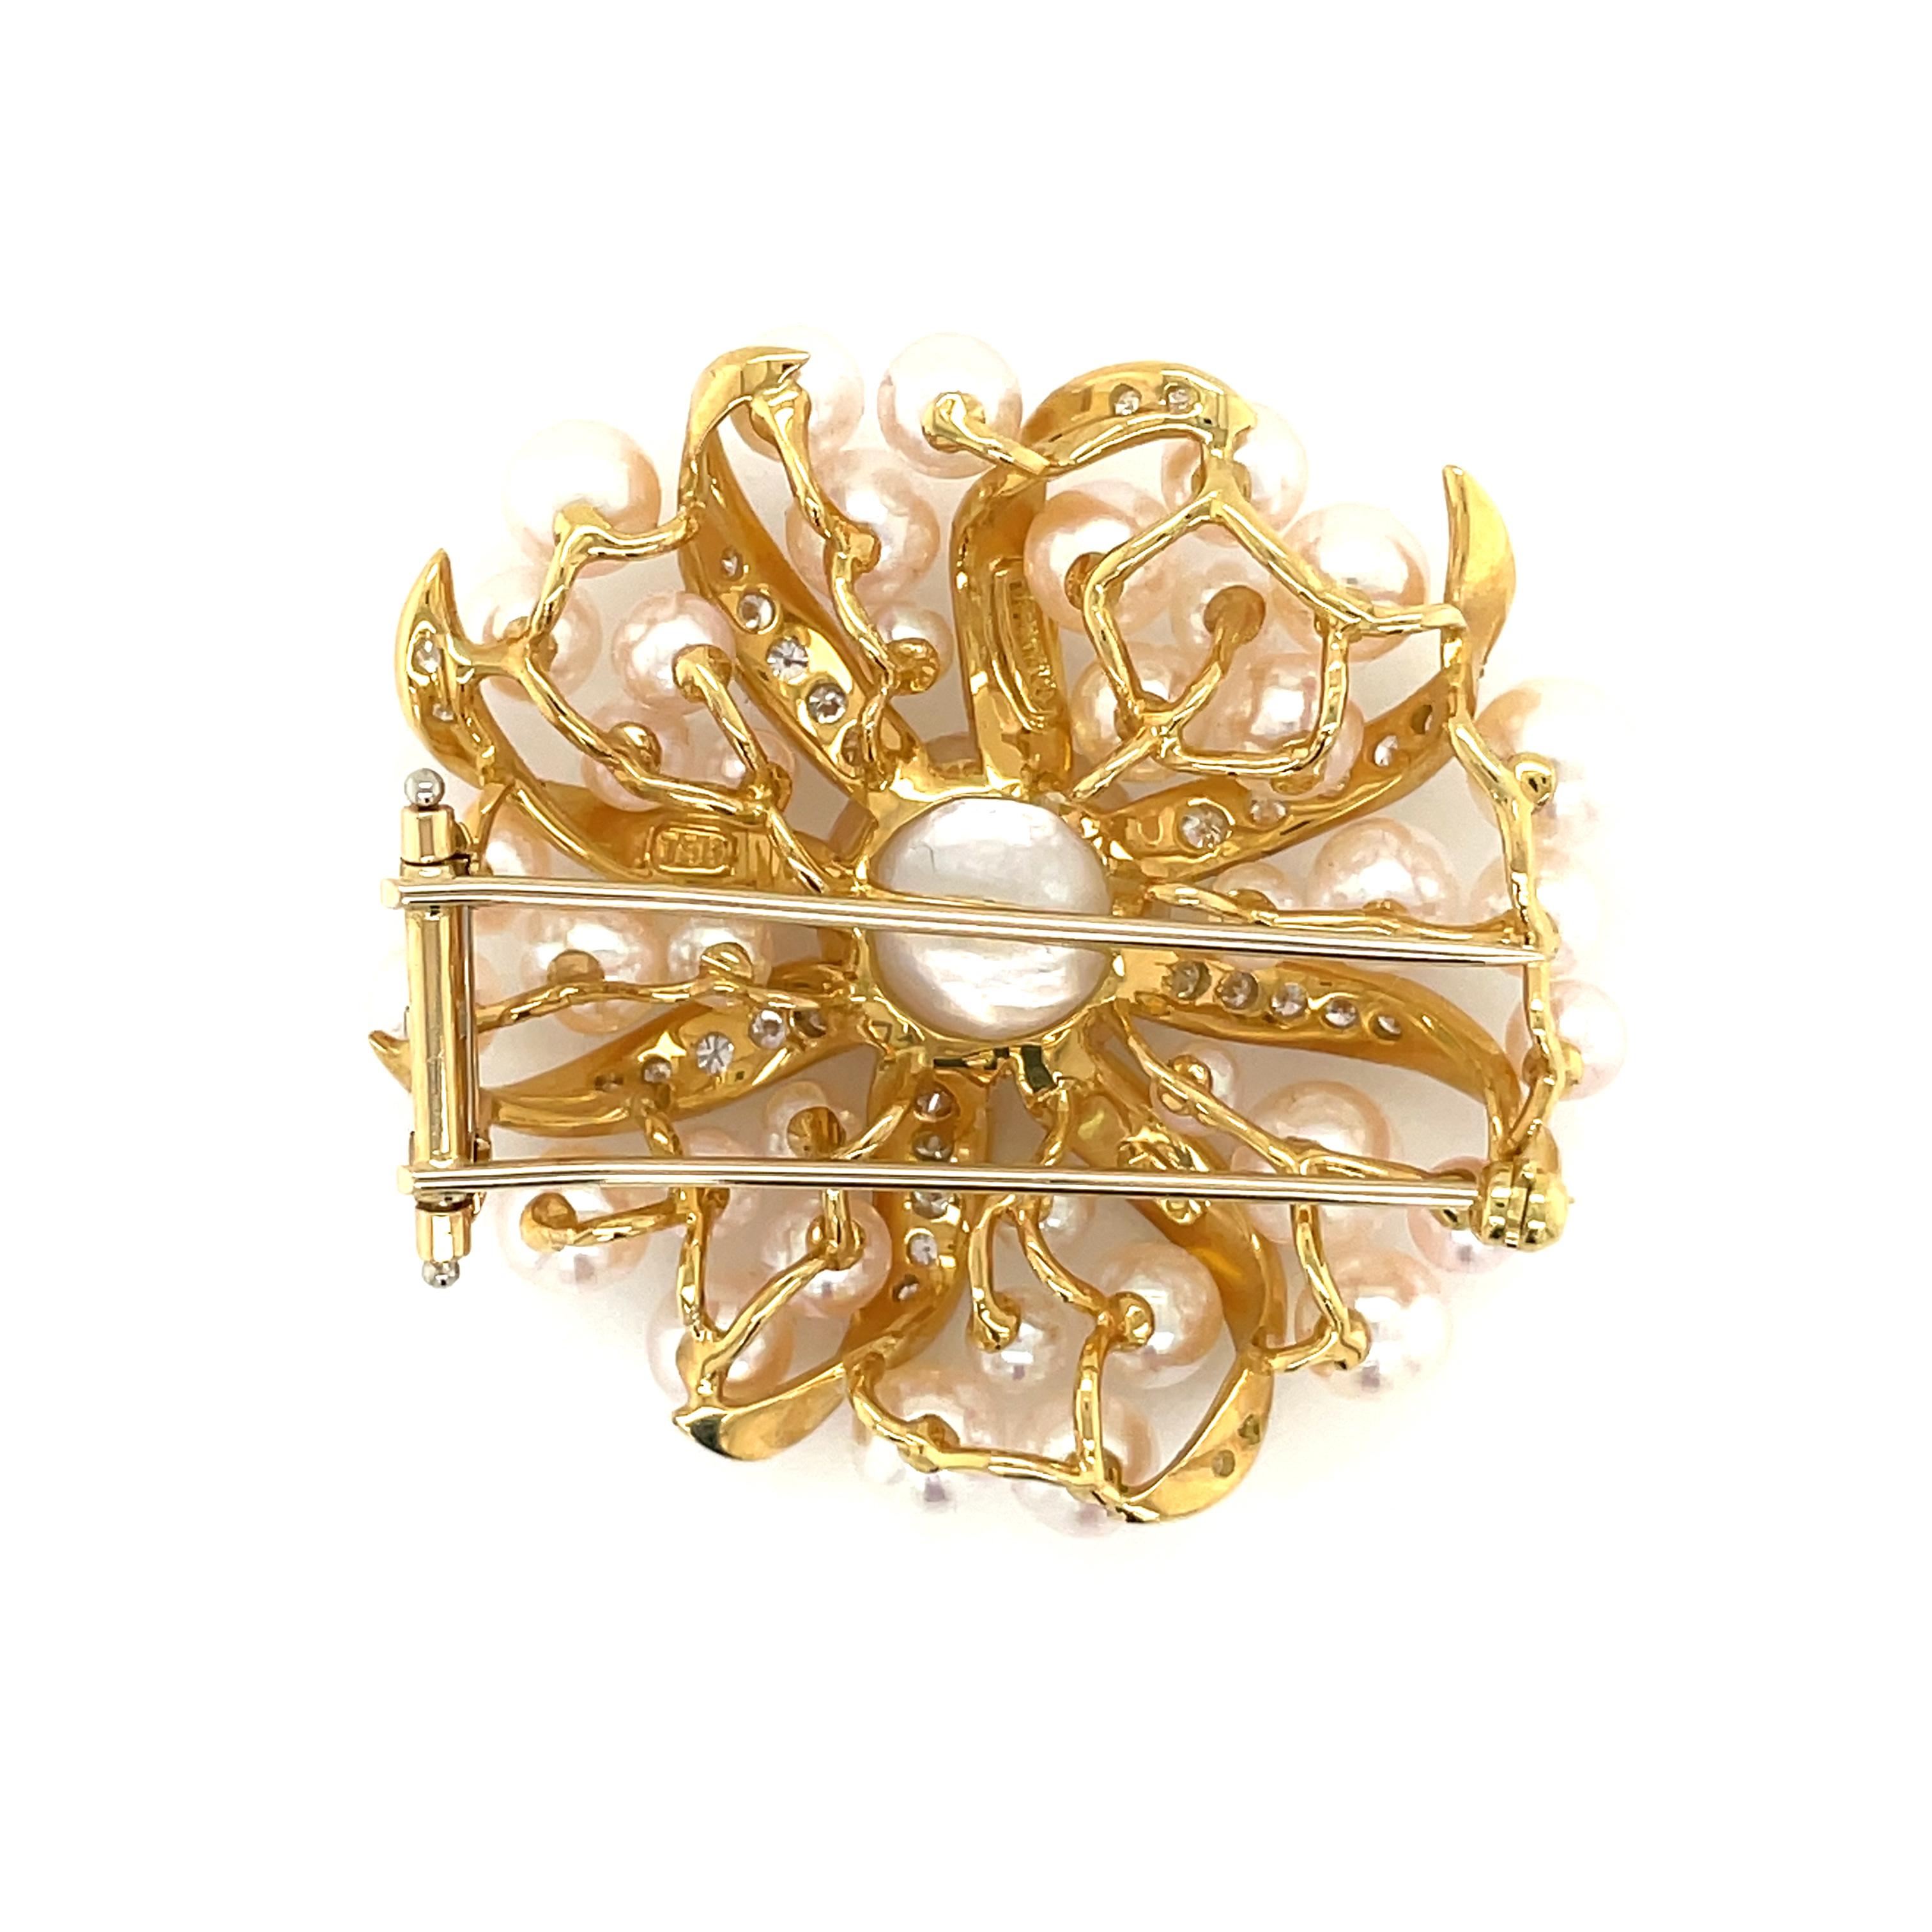 Taille ronde Tiffany & Co Broche fleur en or 18 carats, perles et diamants